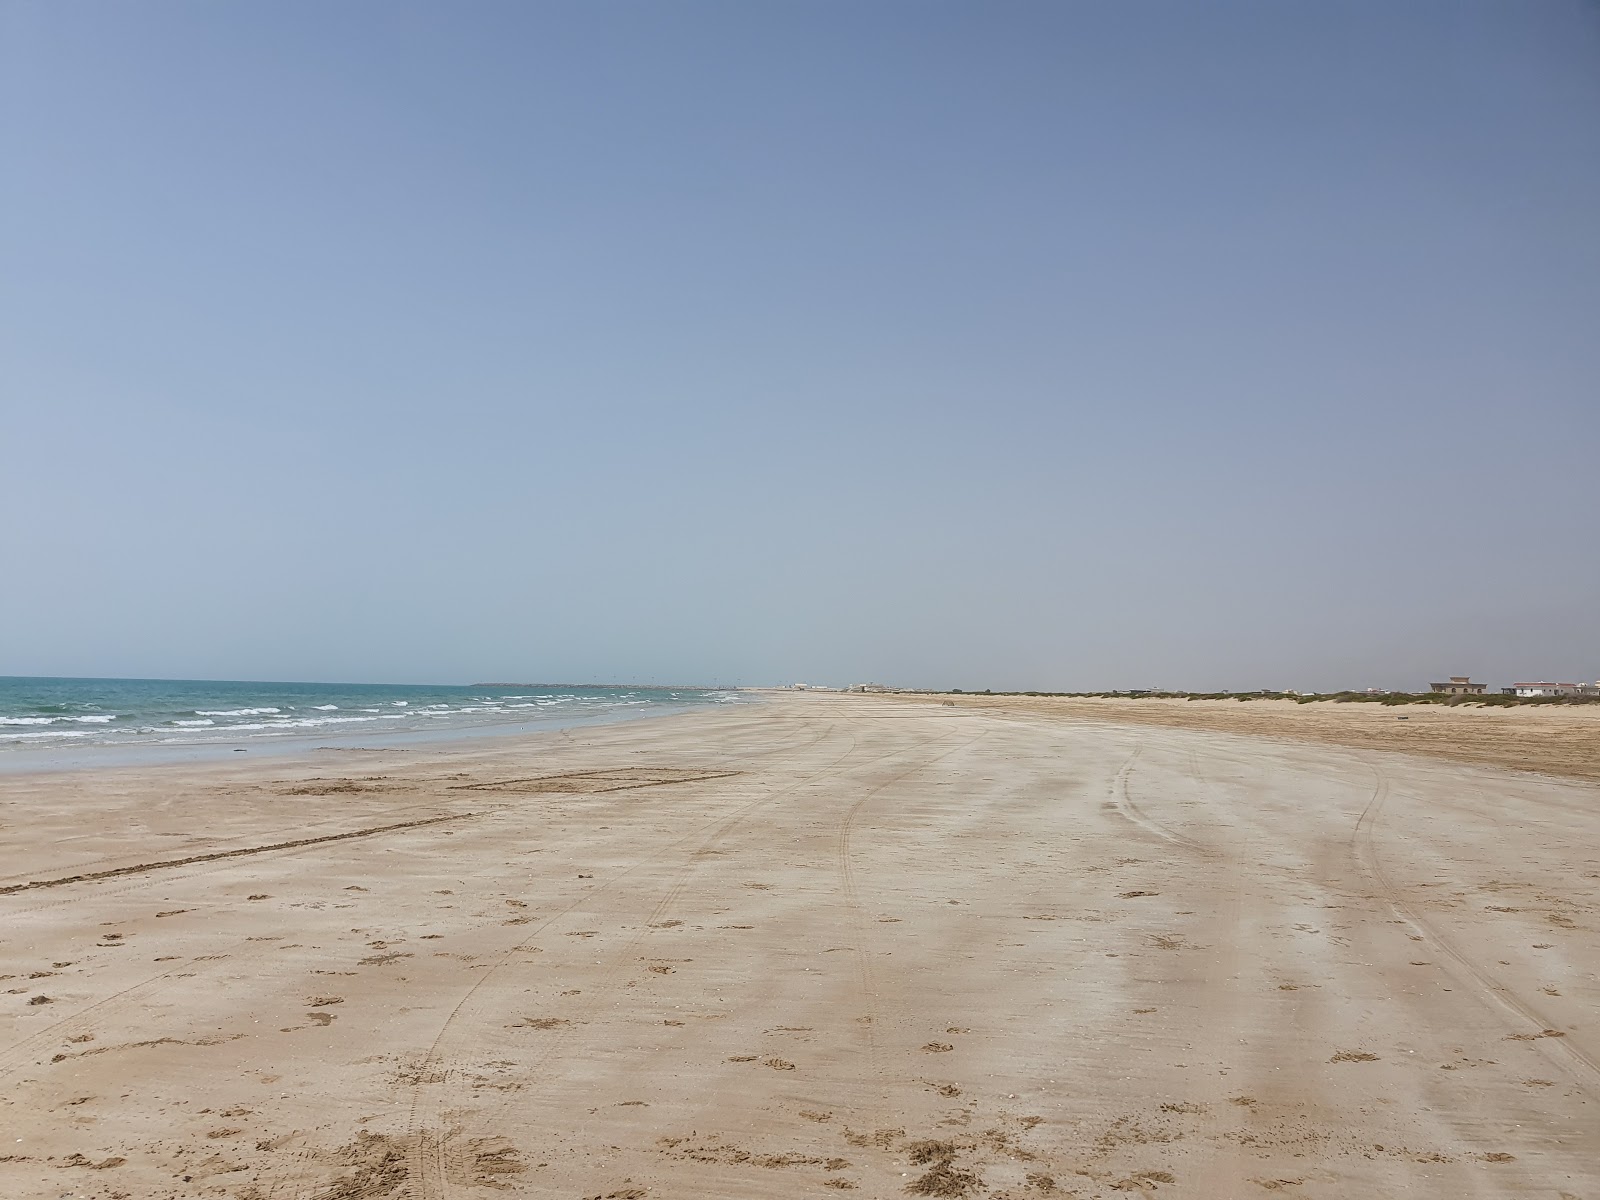 Foto di Al Rams beach con una superficie del sabbia luminosa